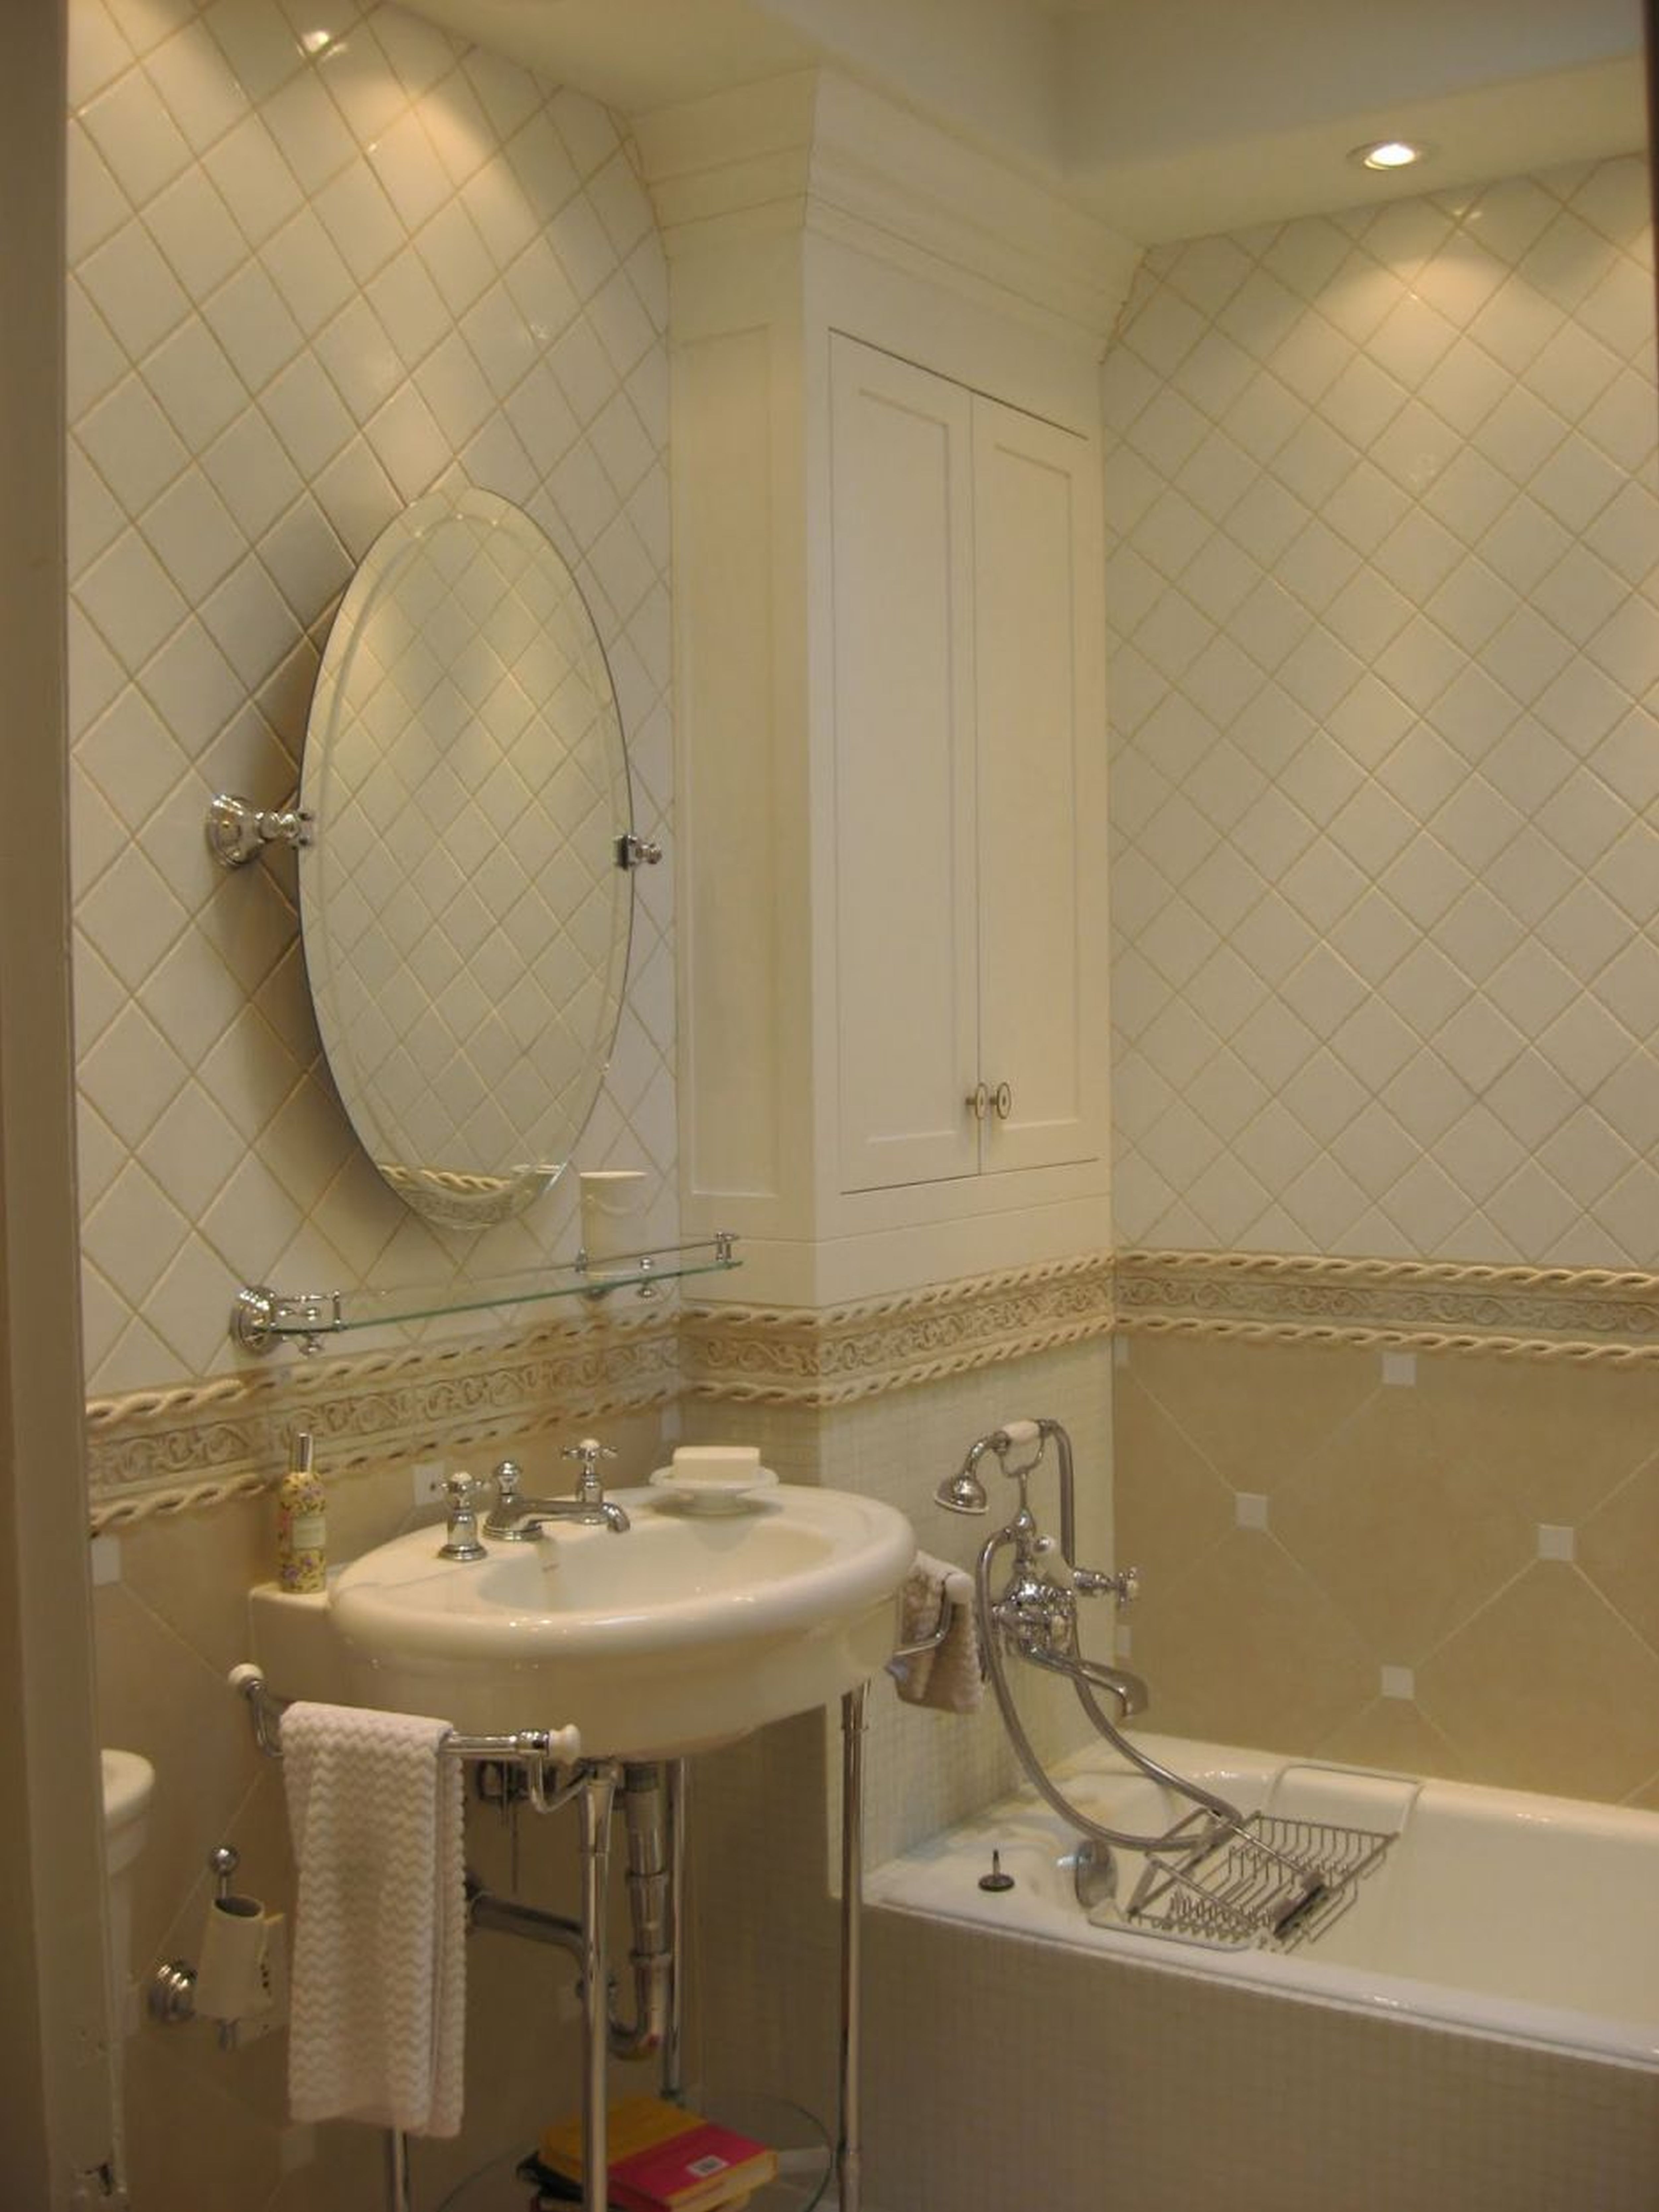 30 Bathroom tile designs on a budget 2019